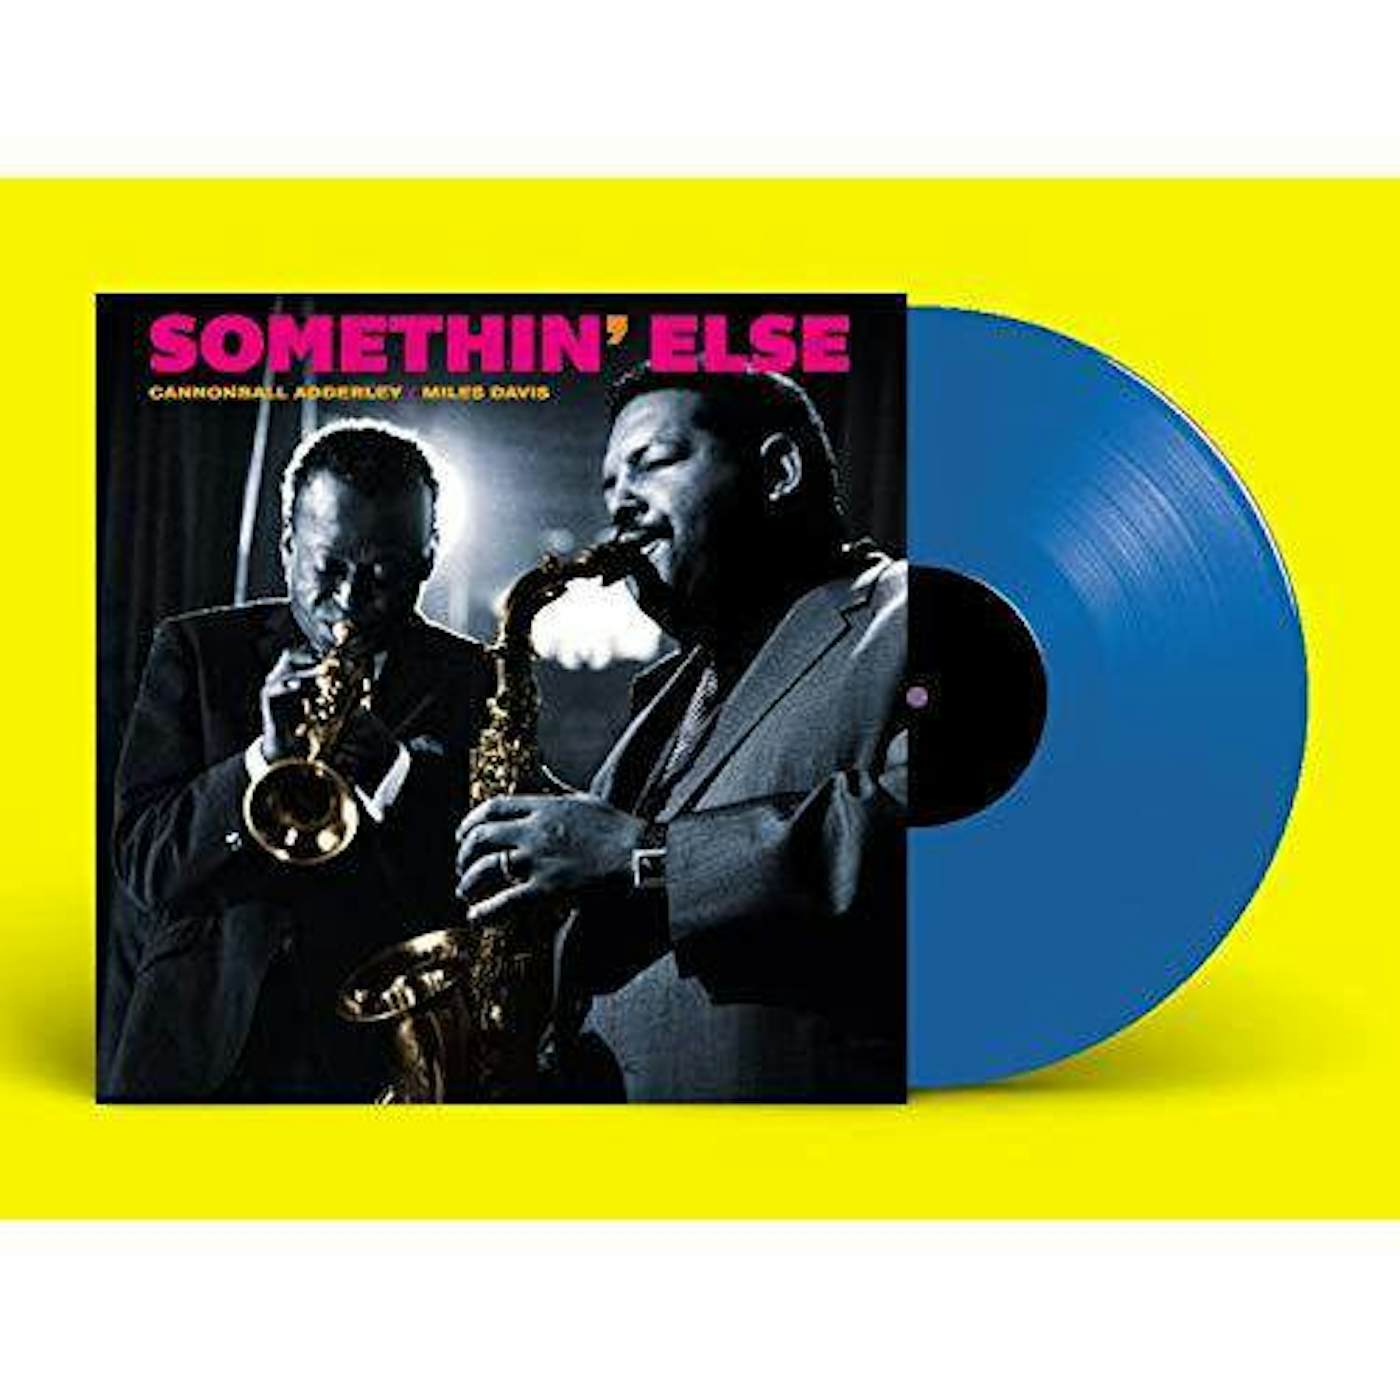 Cannonball Adderley LP Vinyl Record - Somethin' Else (+1 Bonus Track) (Solid Blue Vinyl)